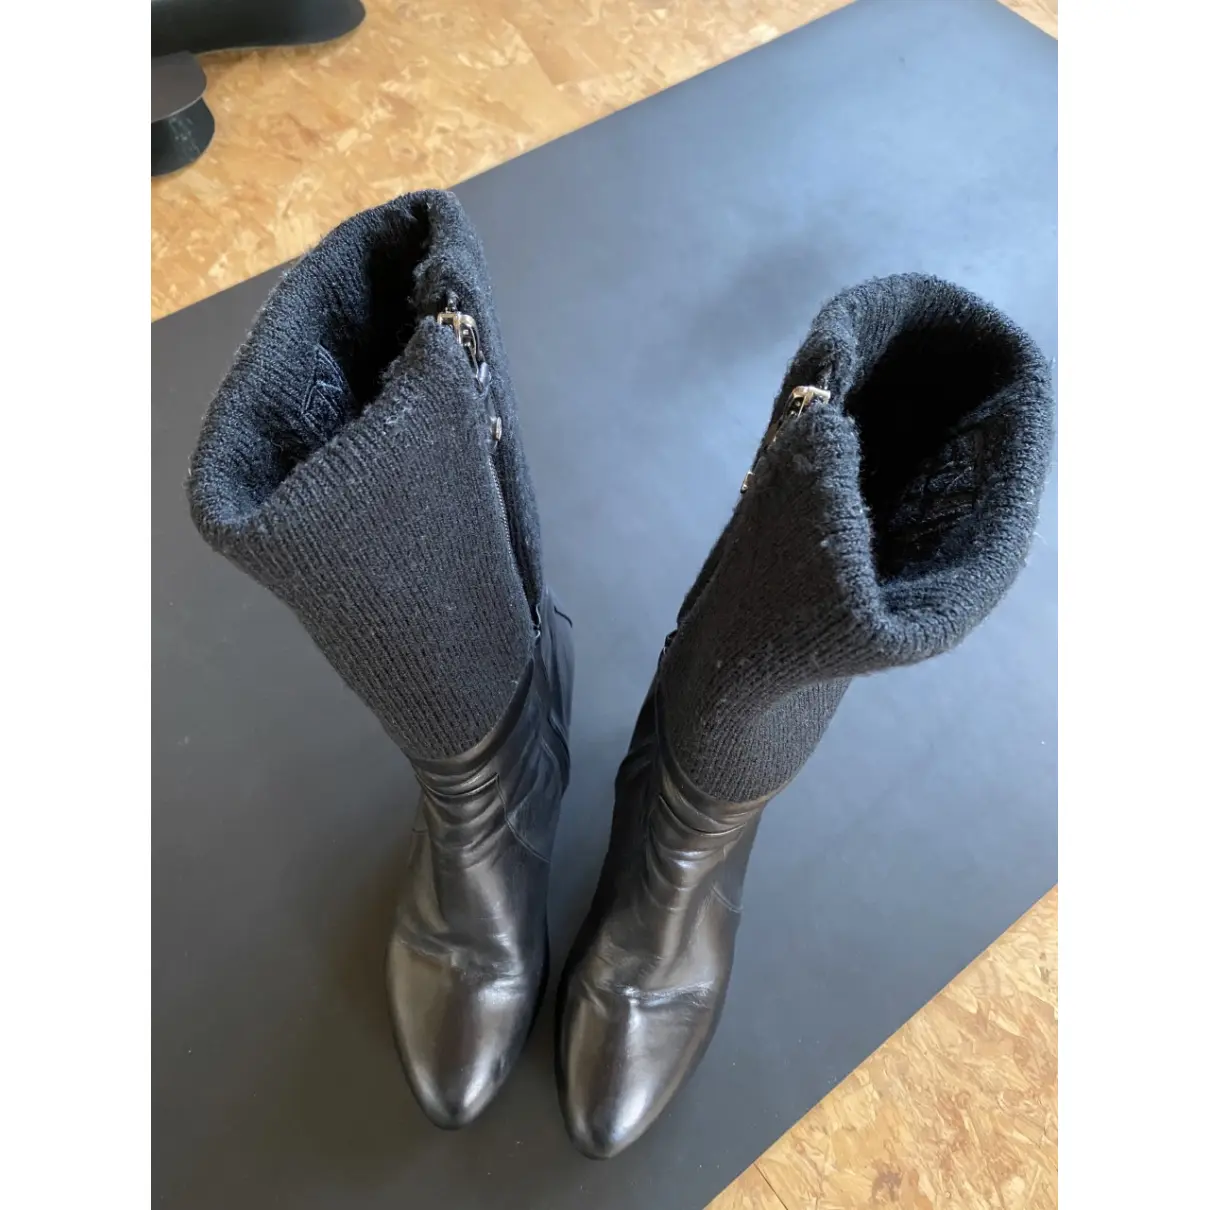 Buy Celine Leather boots online